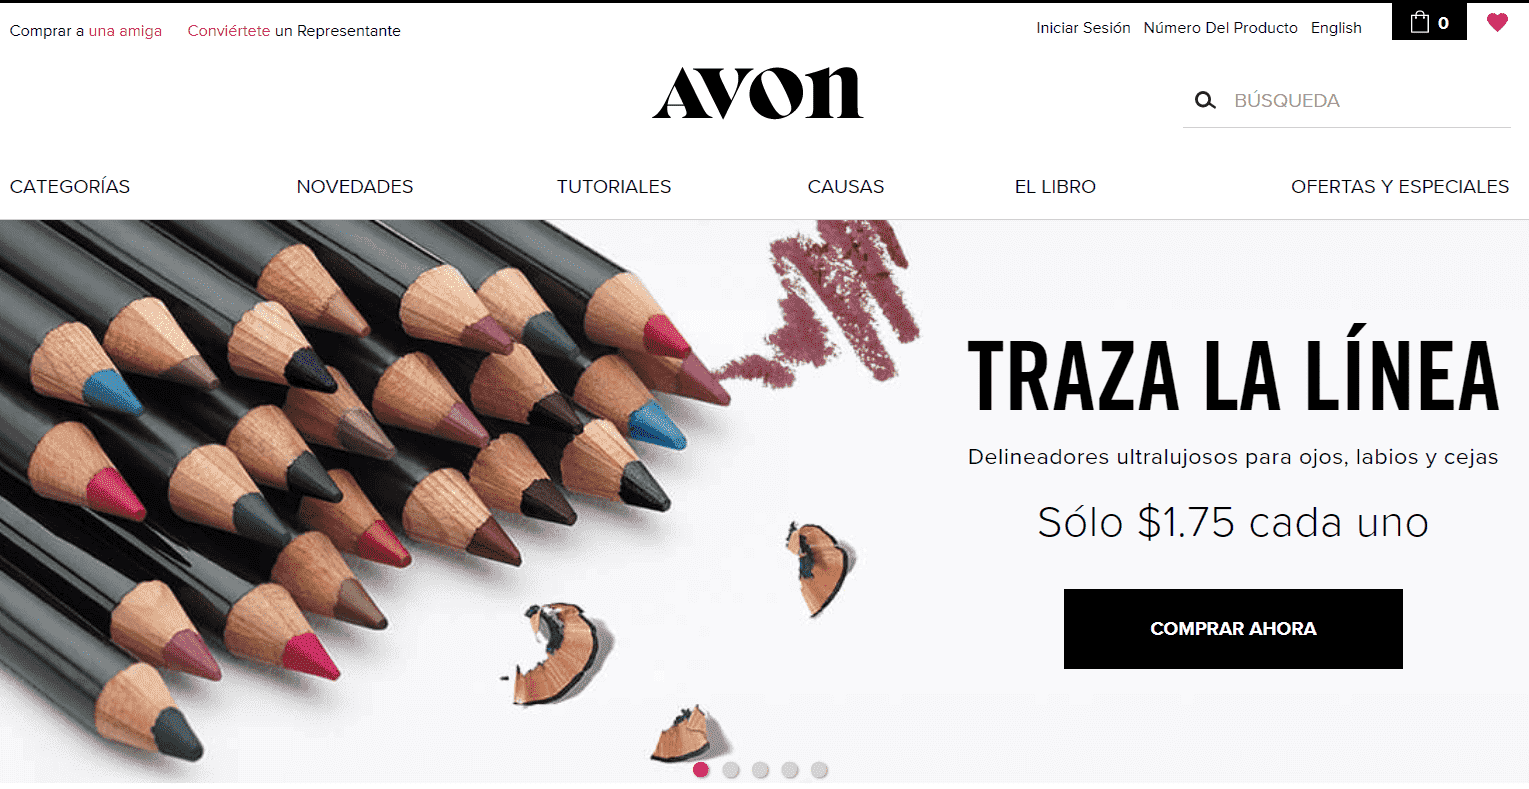 Spanish version of Avon website